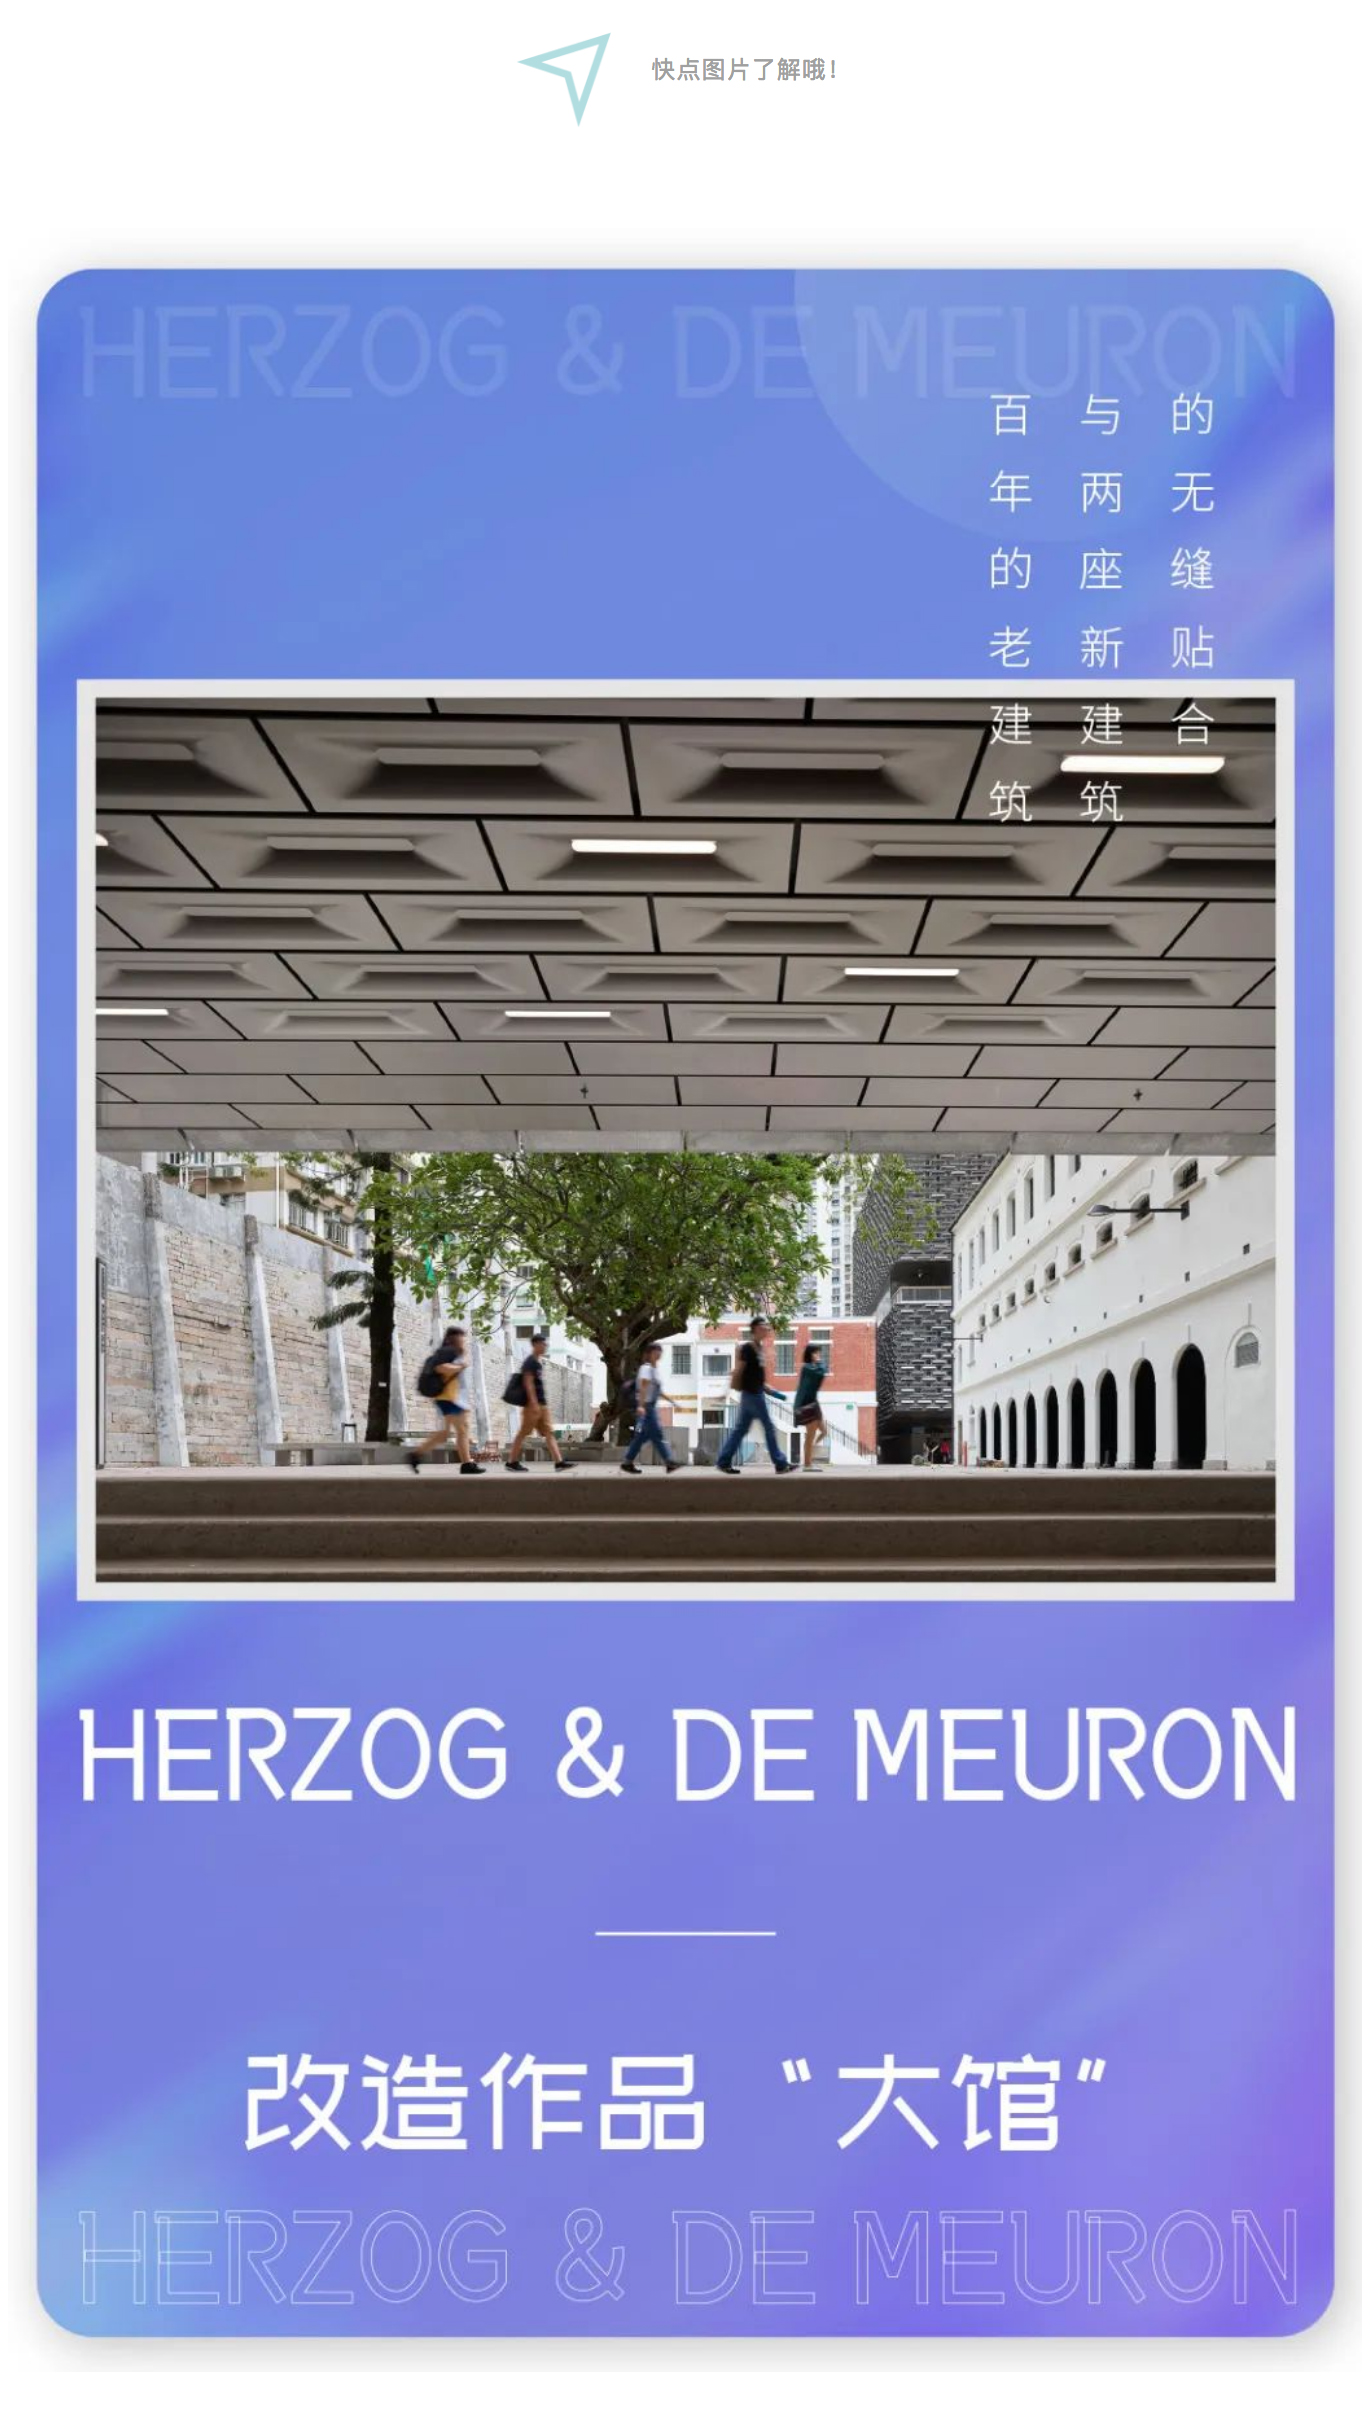 Renewal-Zone：回归25周年，去看香港警署建筑群的惊艳重生-│-Herzog-&-de-M_0001_图层-2.jpg